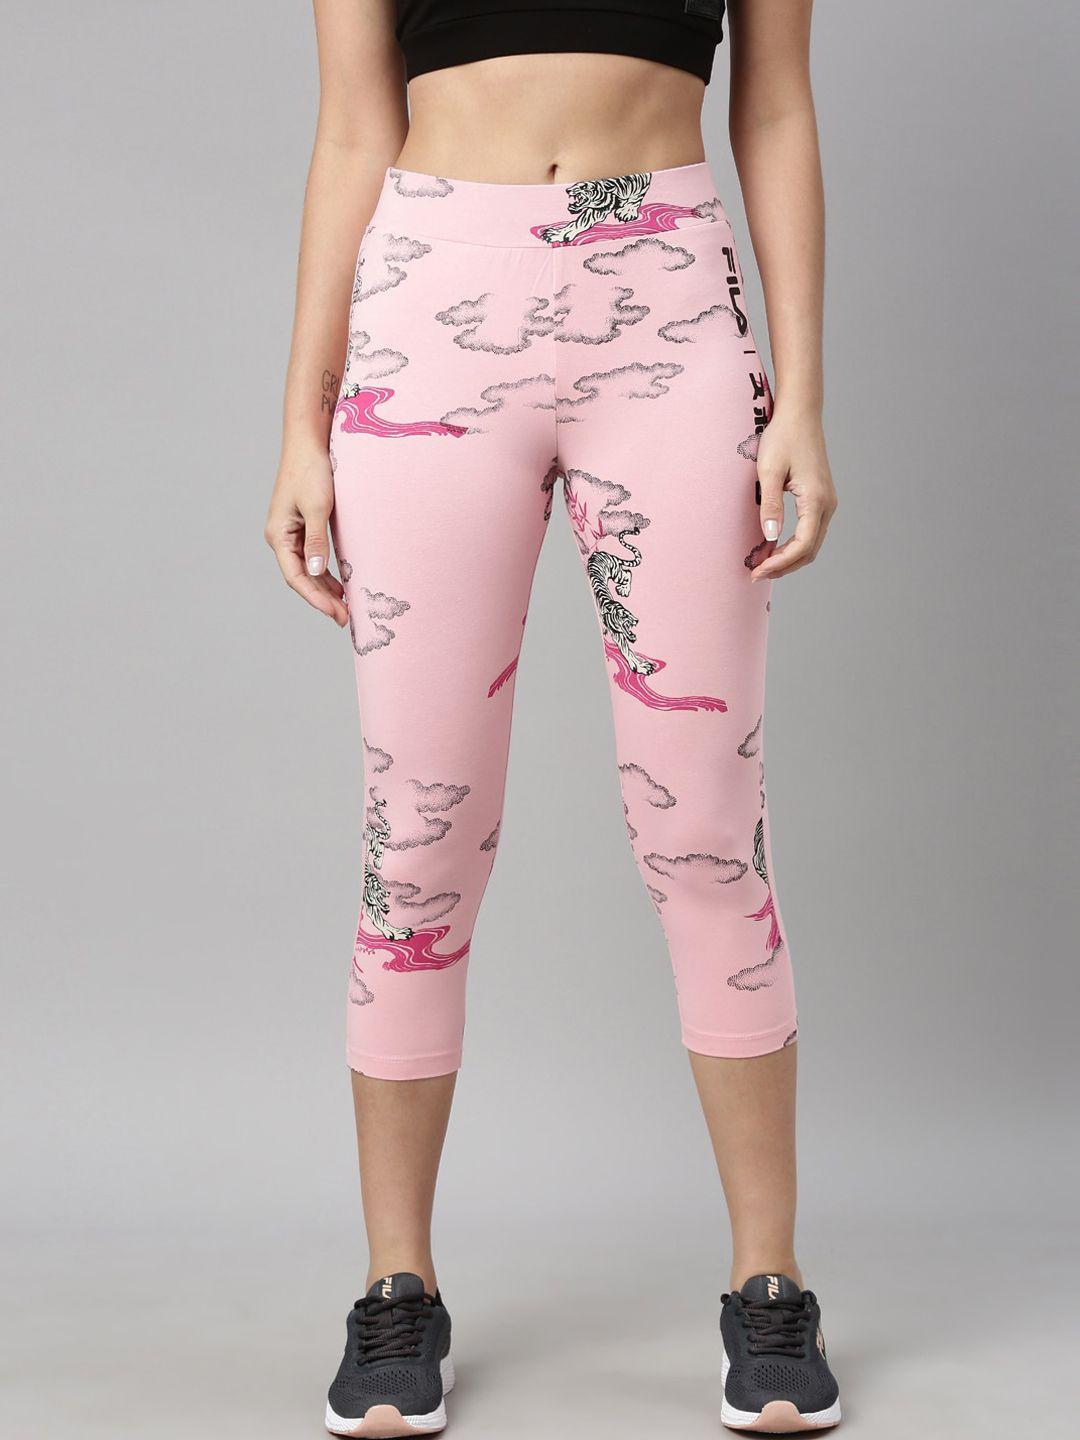 fila-women-pink-printed-tights